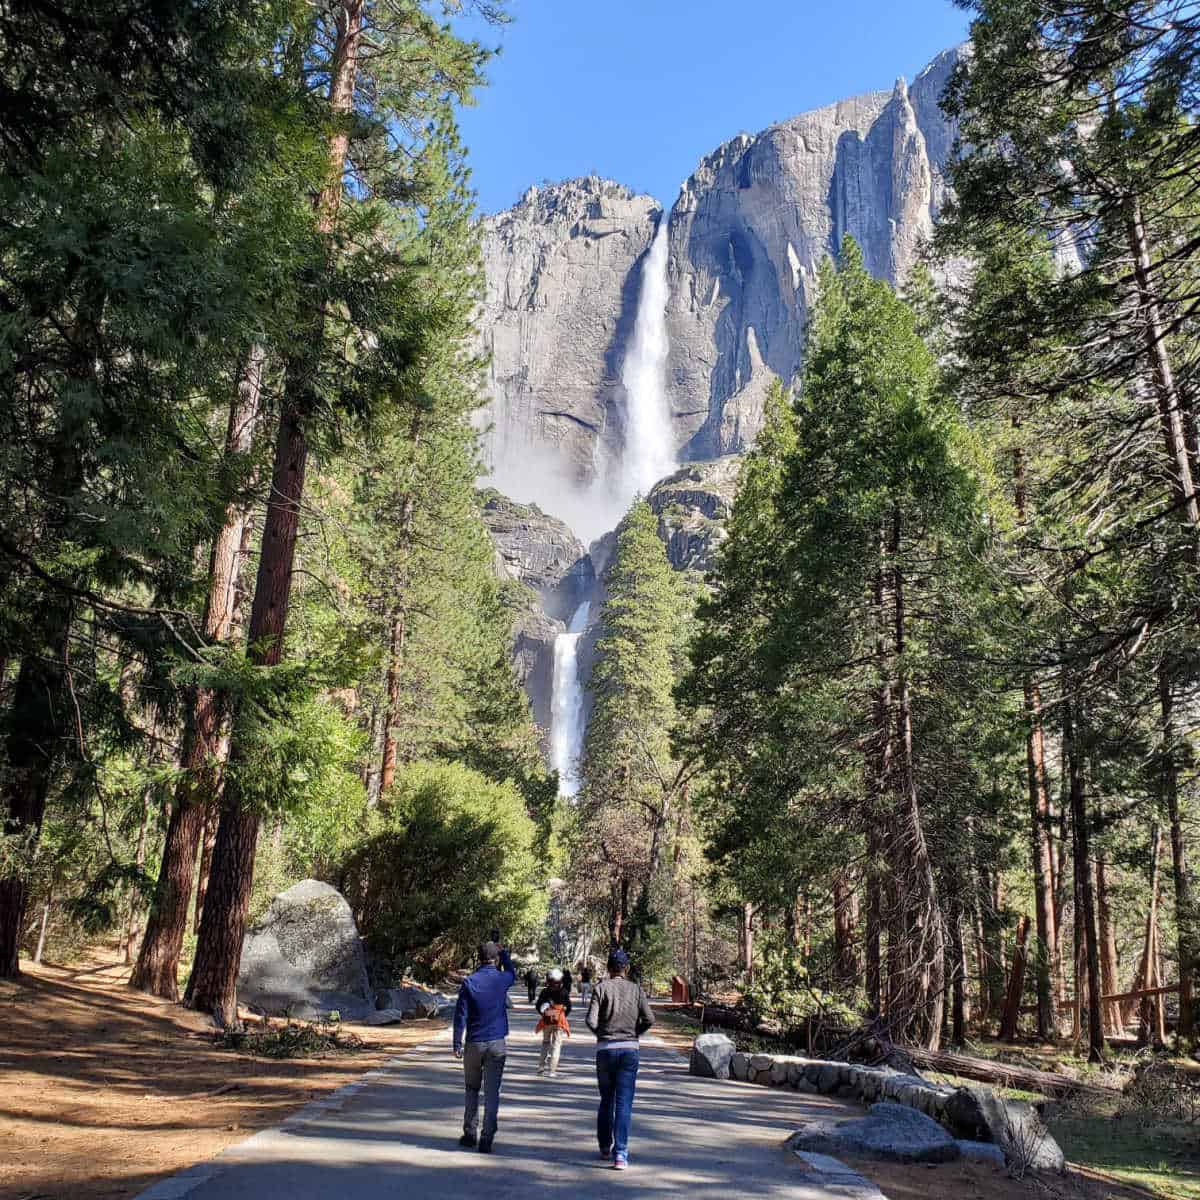 Hiking towards Yosemite Falls with Yosemite Falls in the background